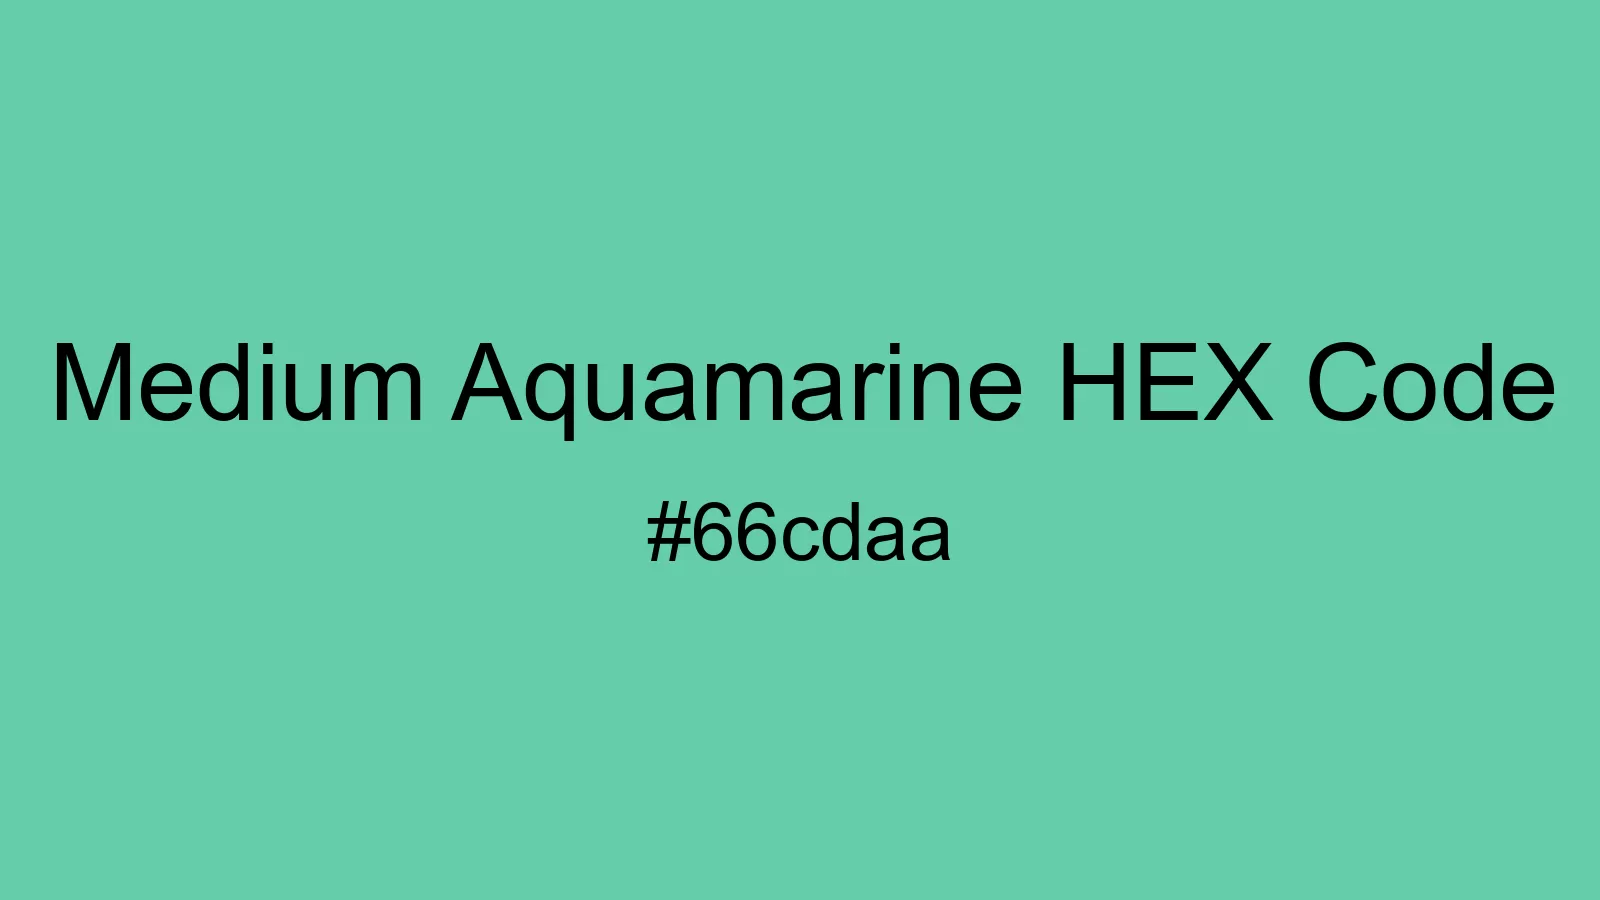 preview image of Medium Aquamarine color and HEX code